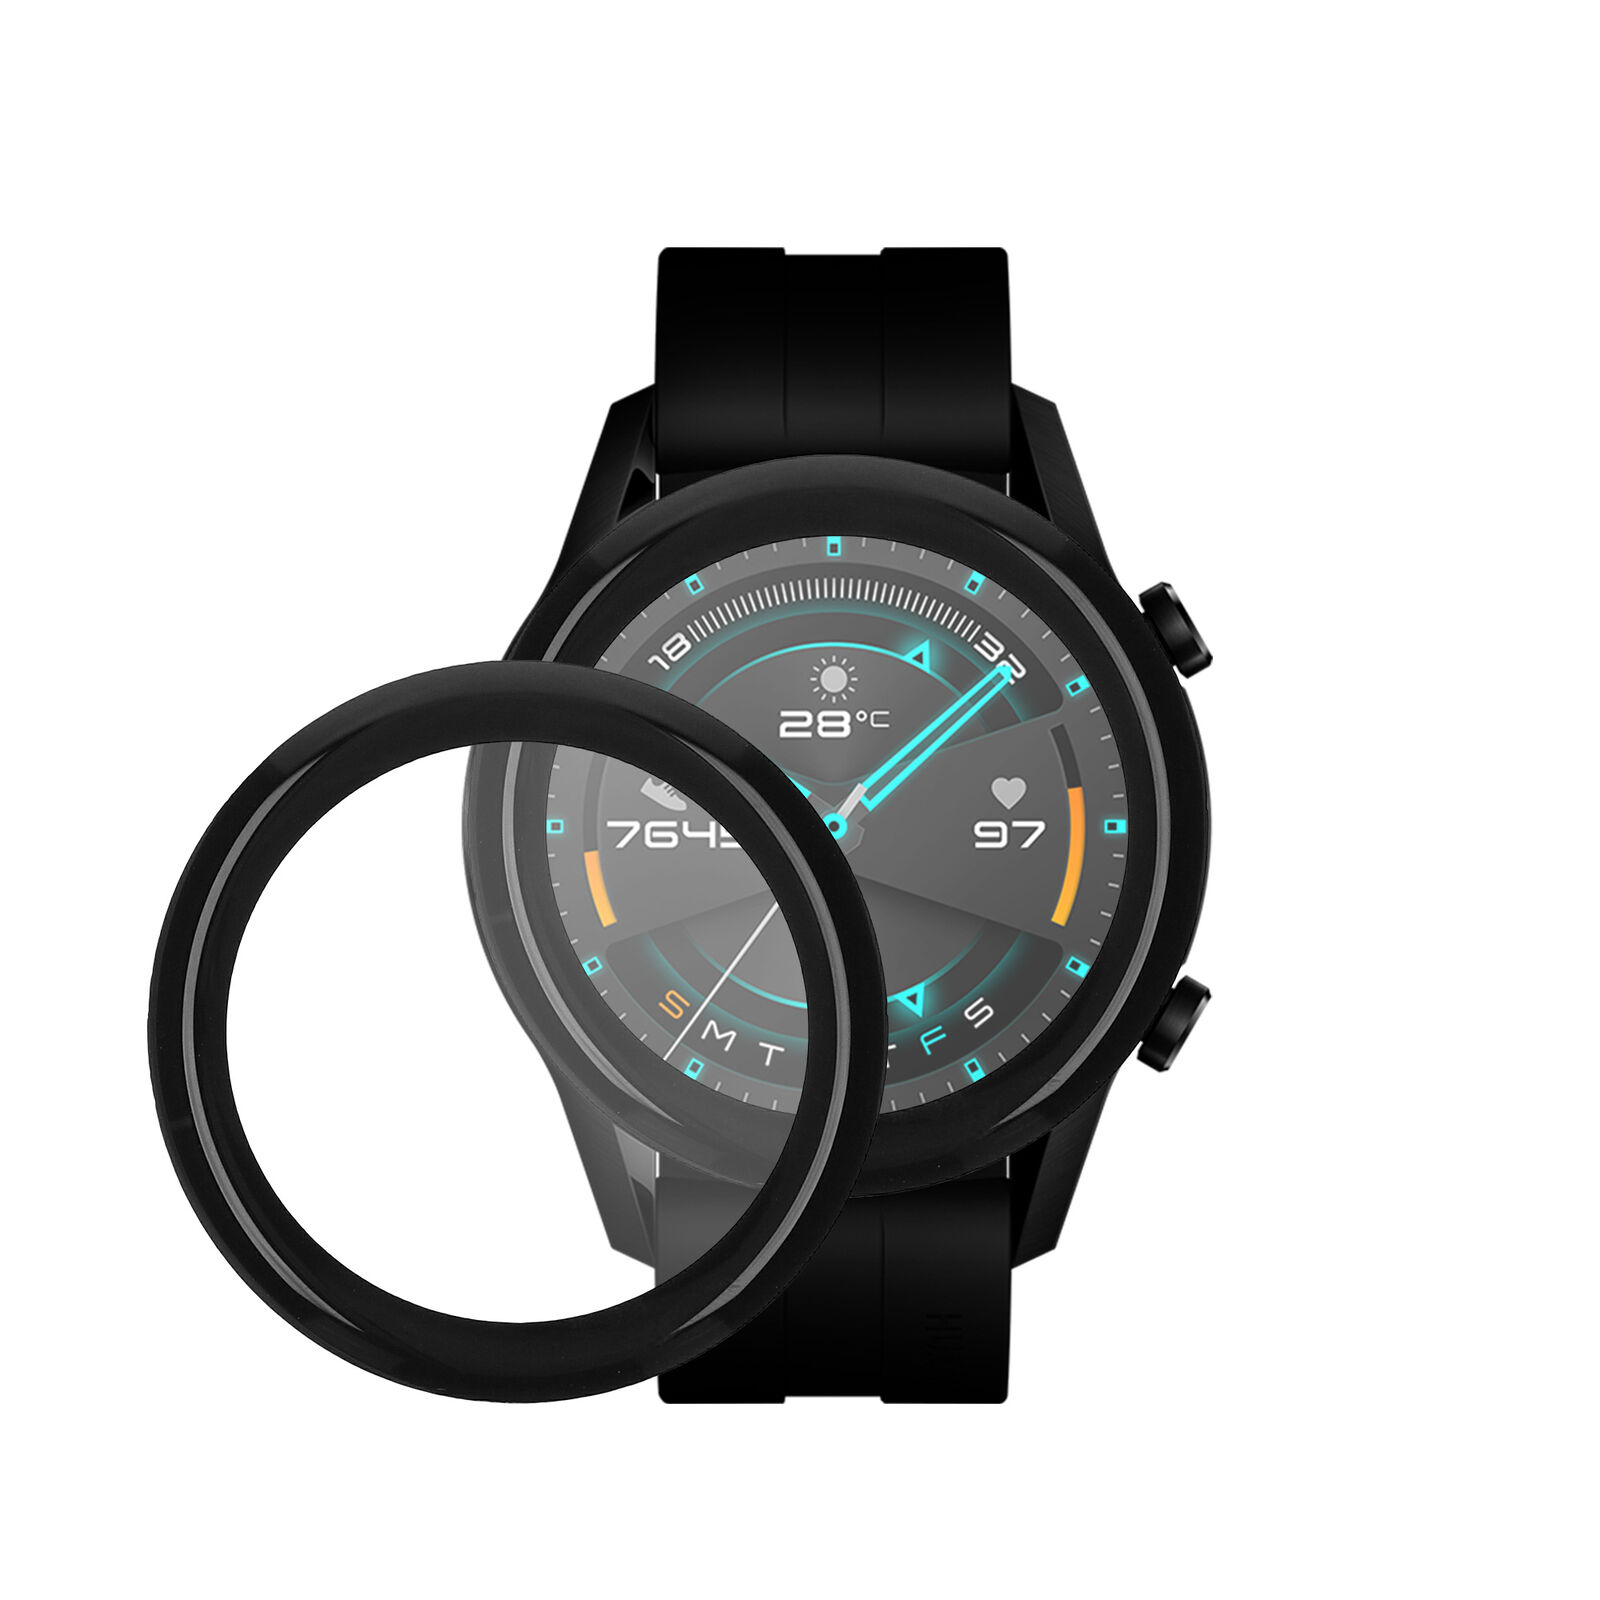 2x Pellicola Protettiva Smartwatch per Huawei Watch GT2 42mm